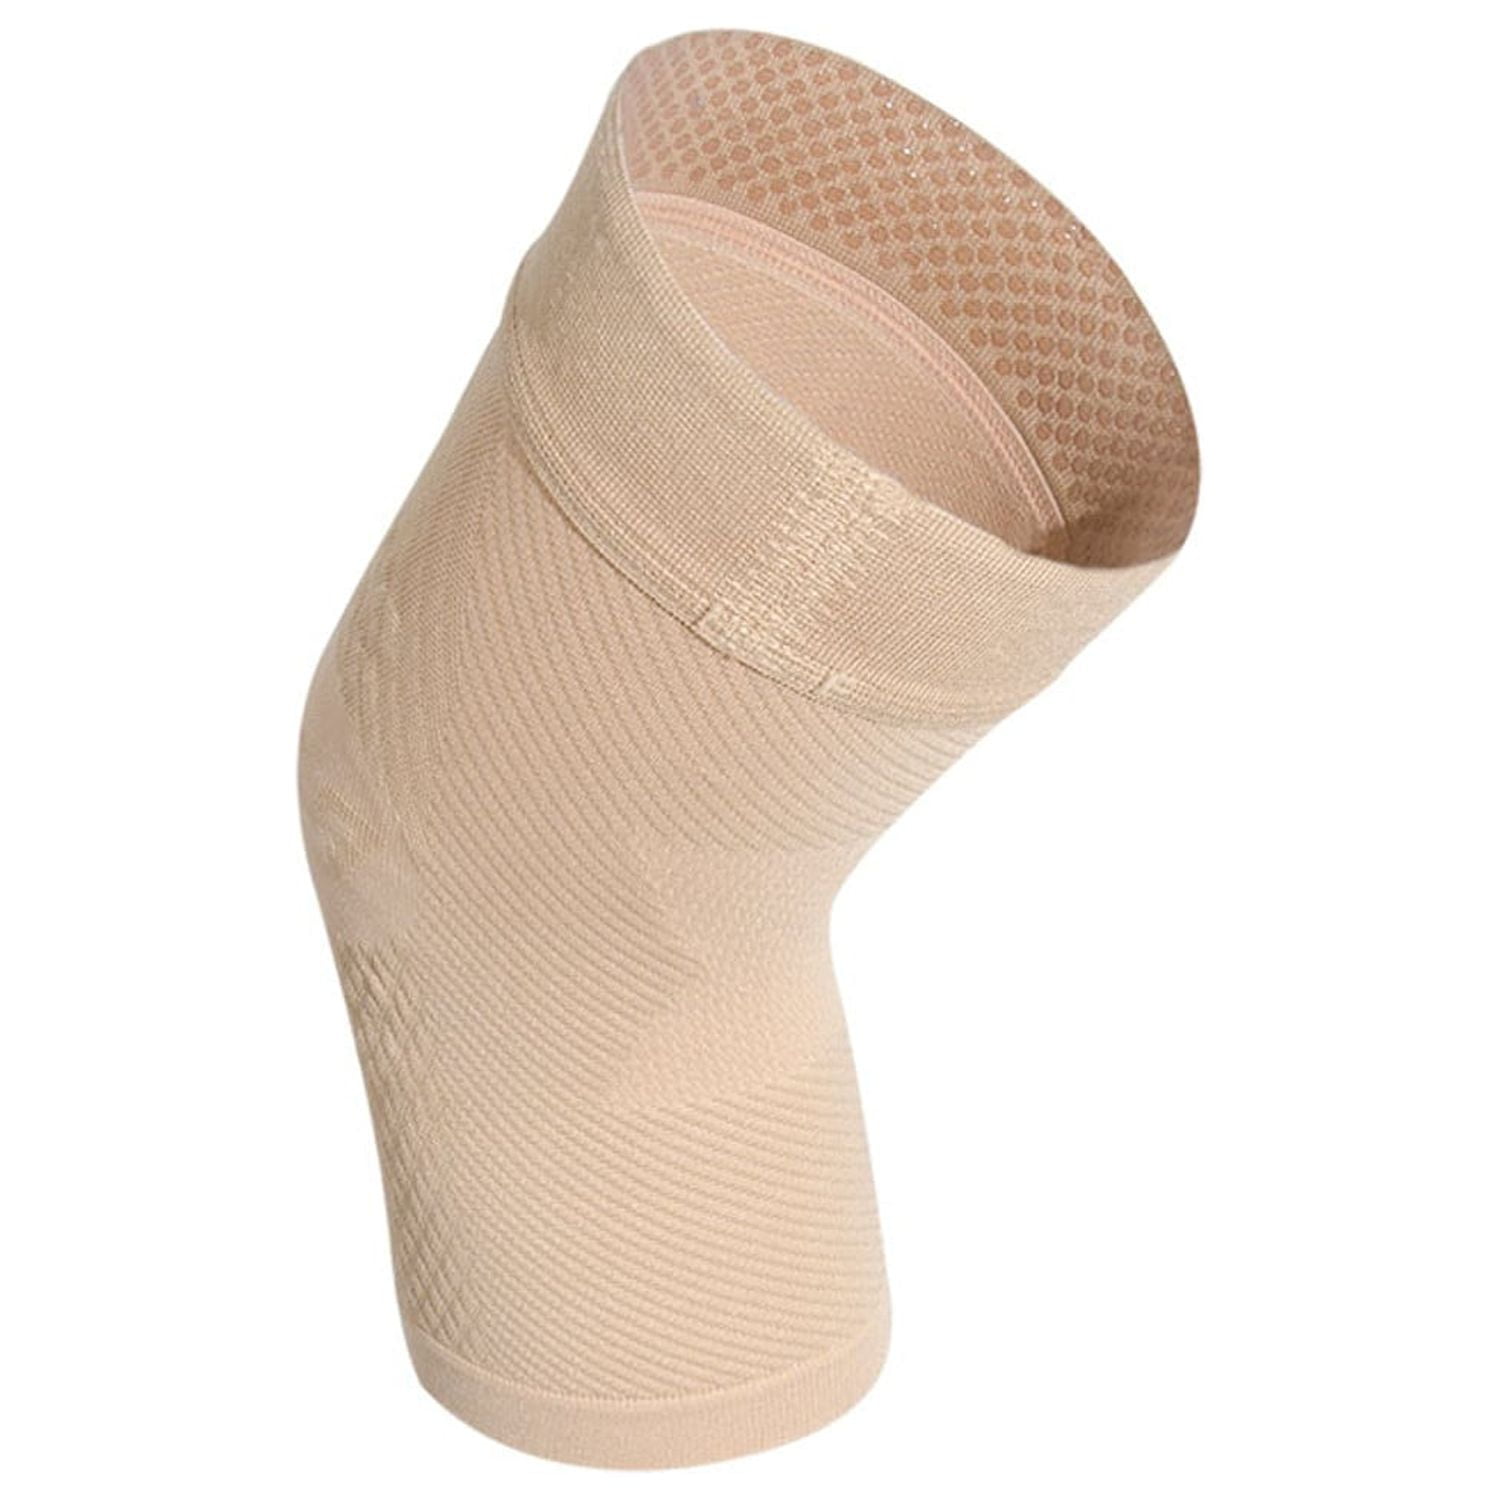 Orthosleeve Compression Sleeves